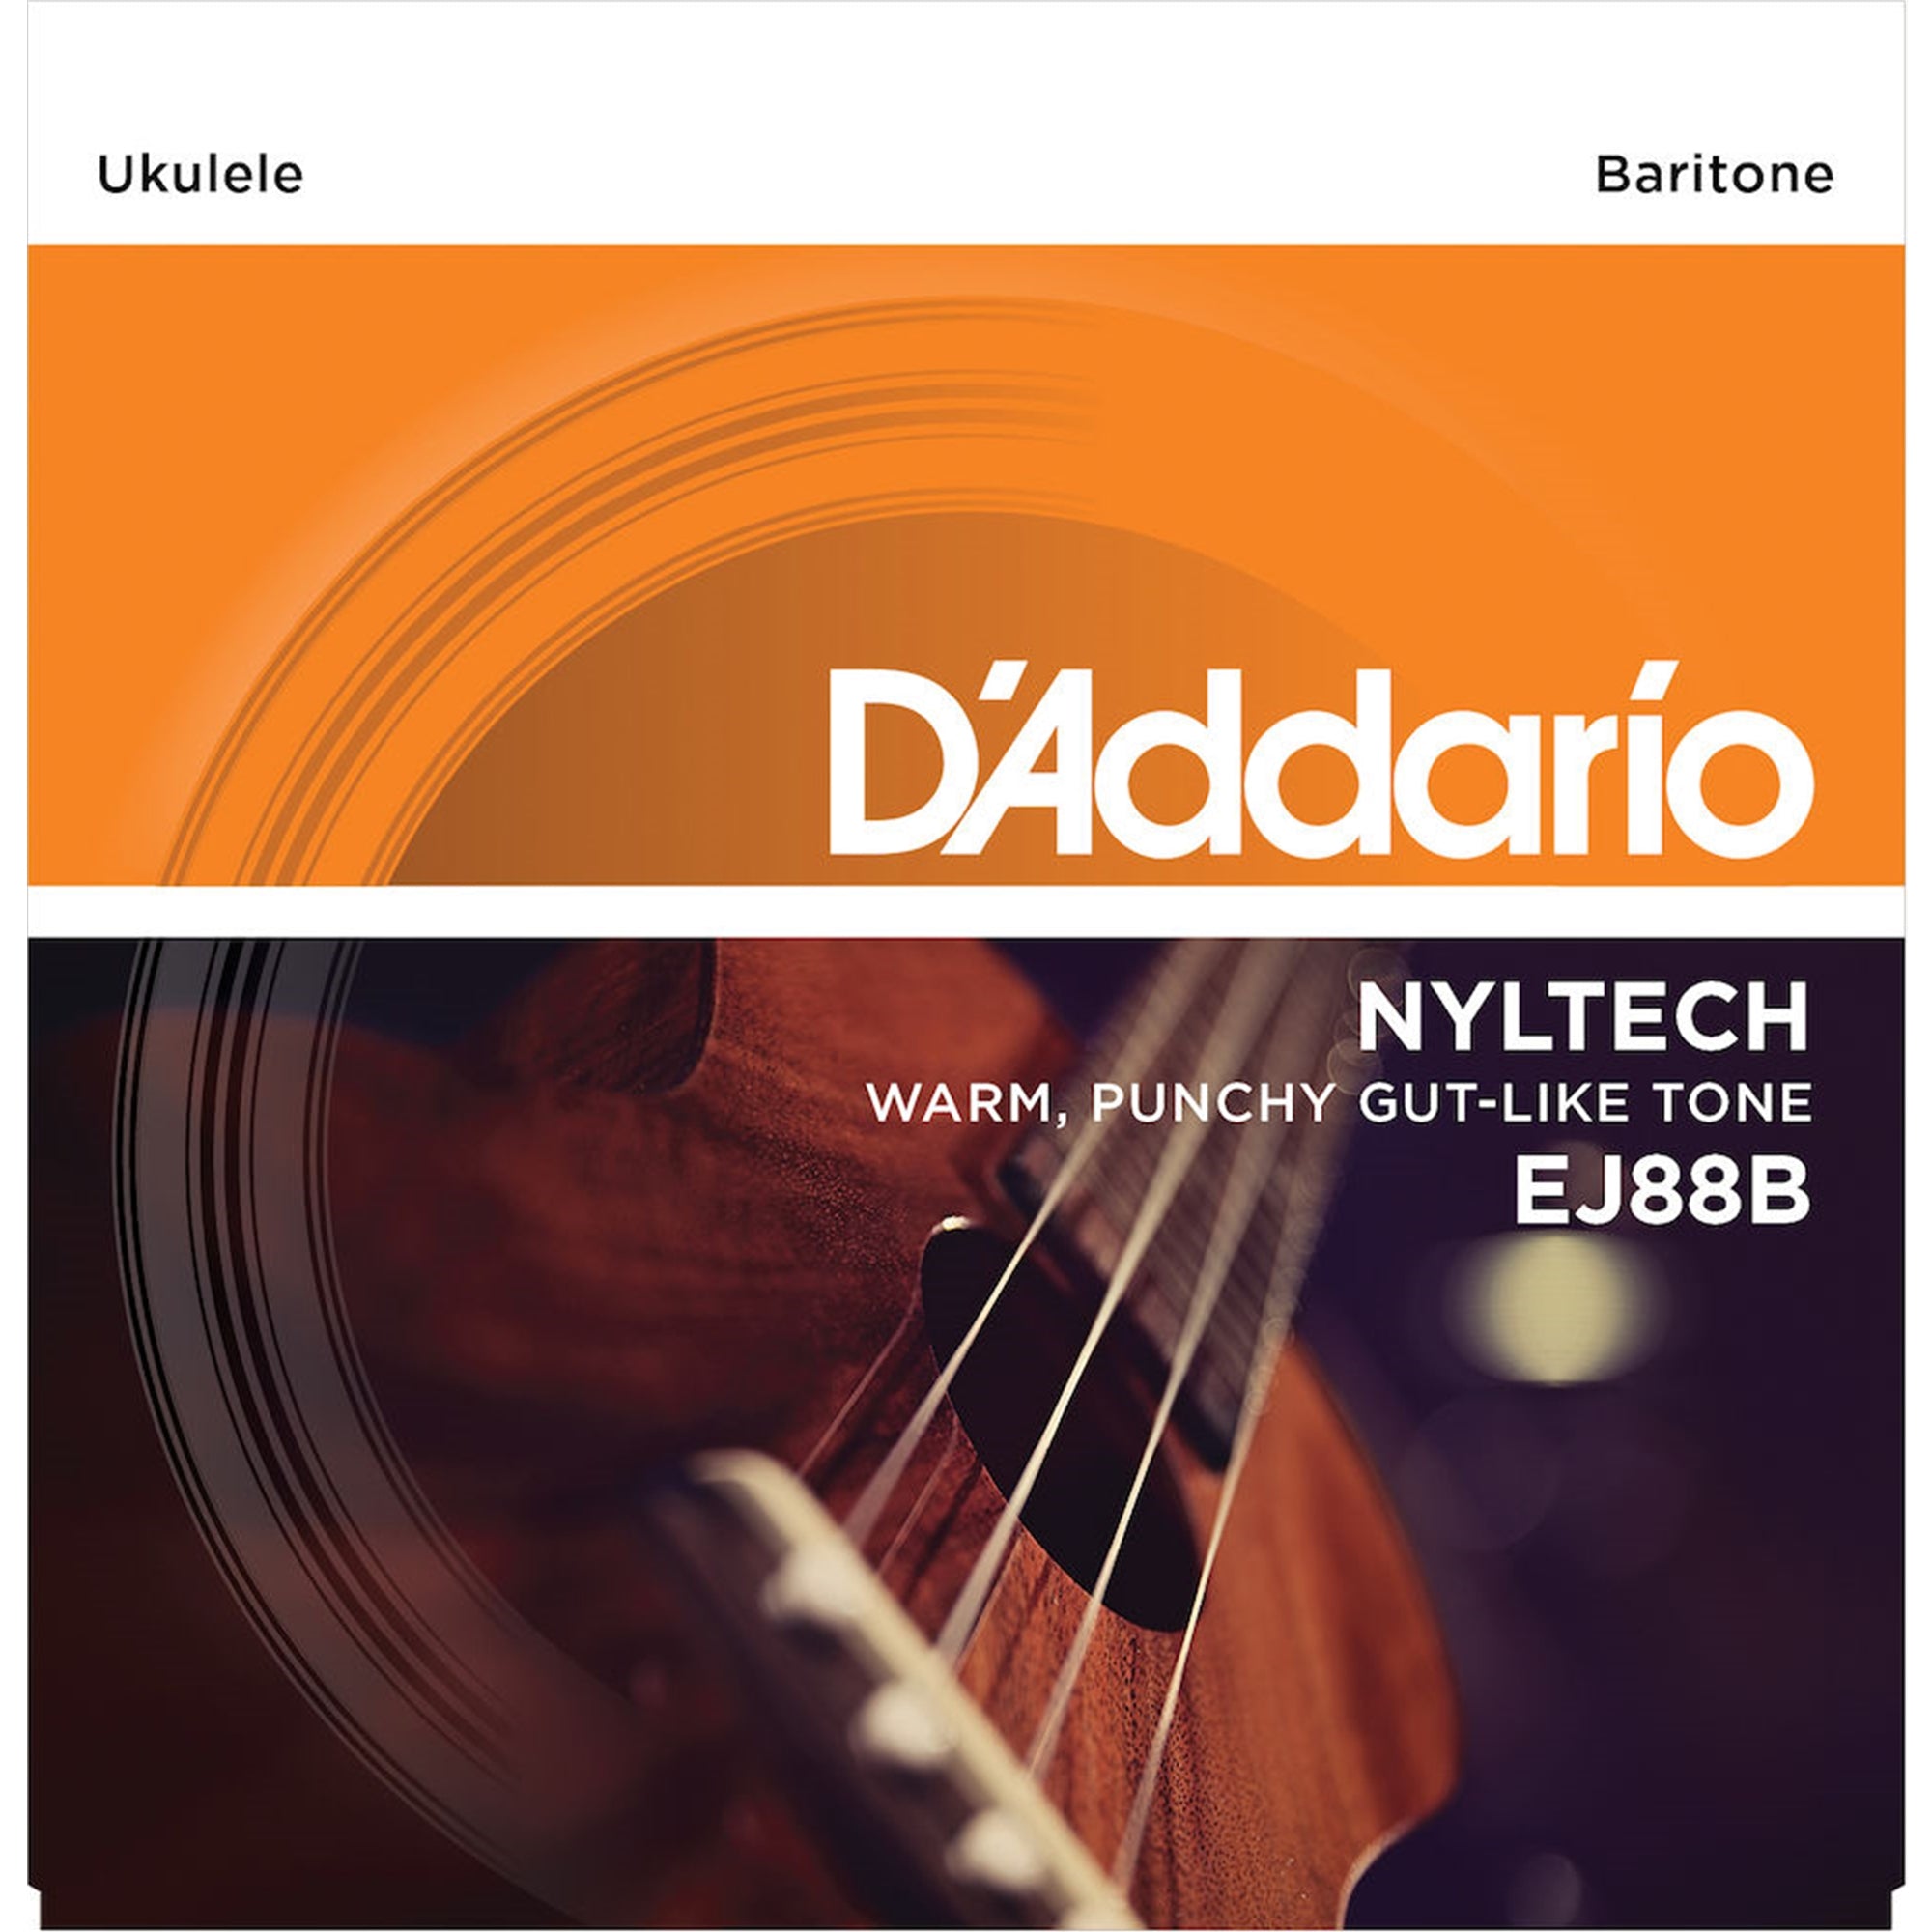 D'ADDARIO EJ88B Baritone Nyltech Ukulele Strings